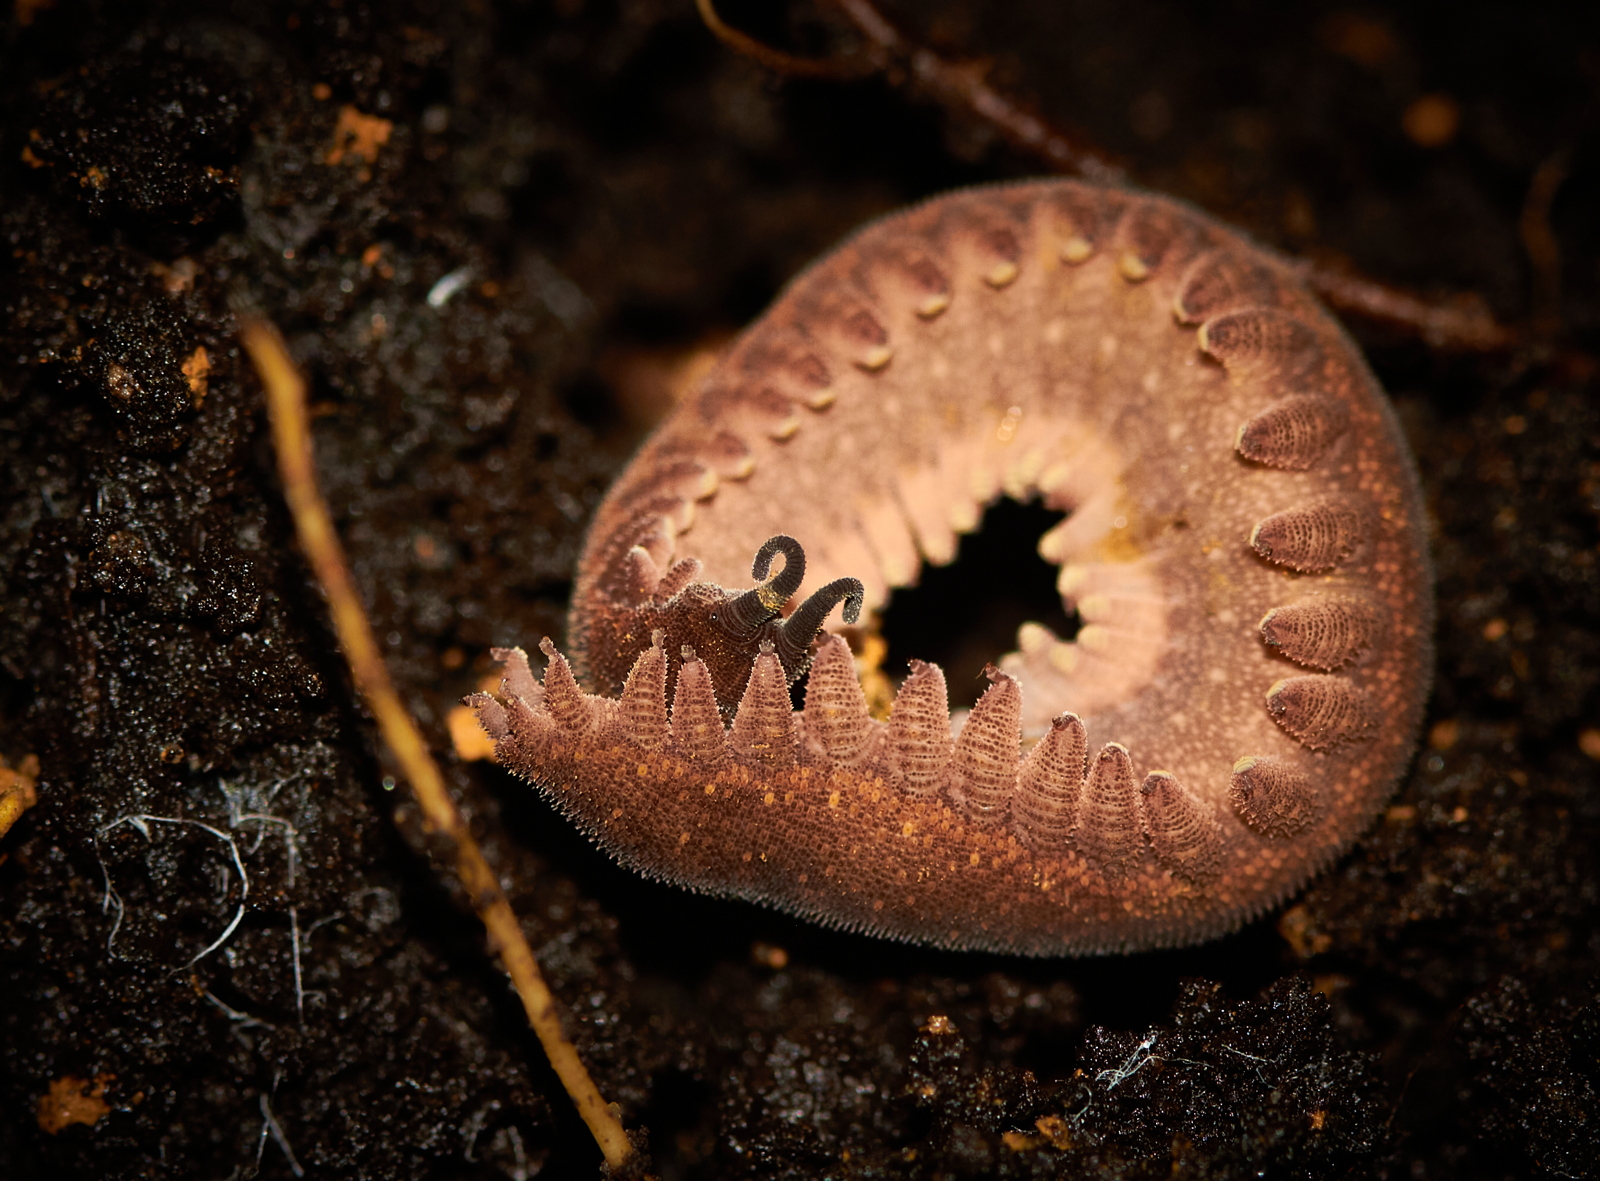 10 – Onychophora or velvet worm